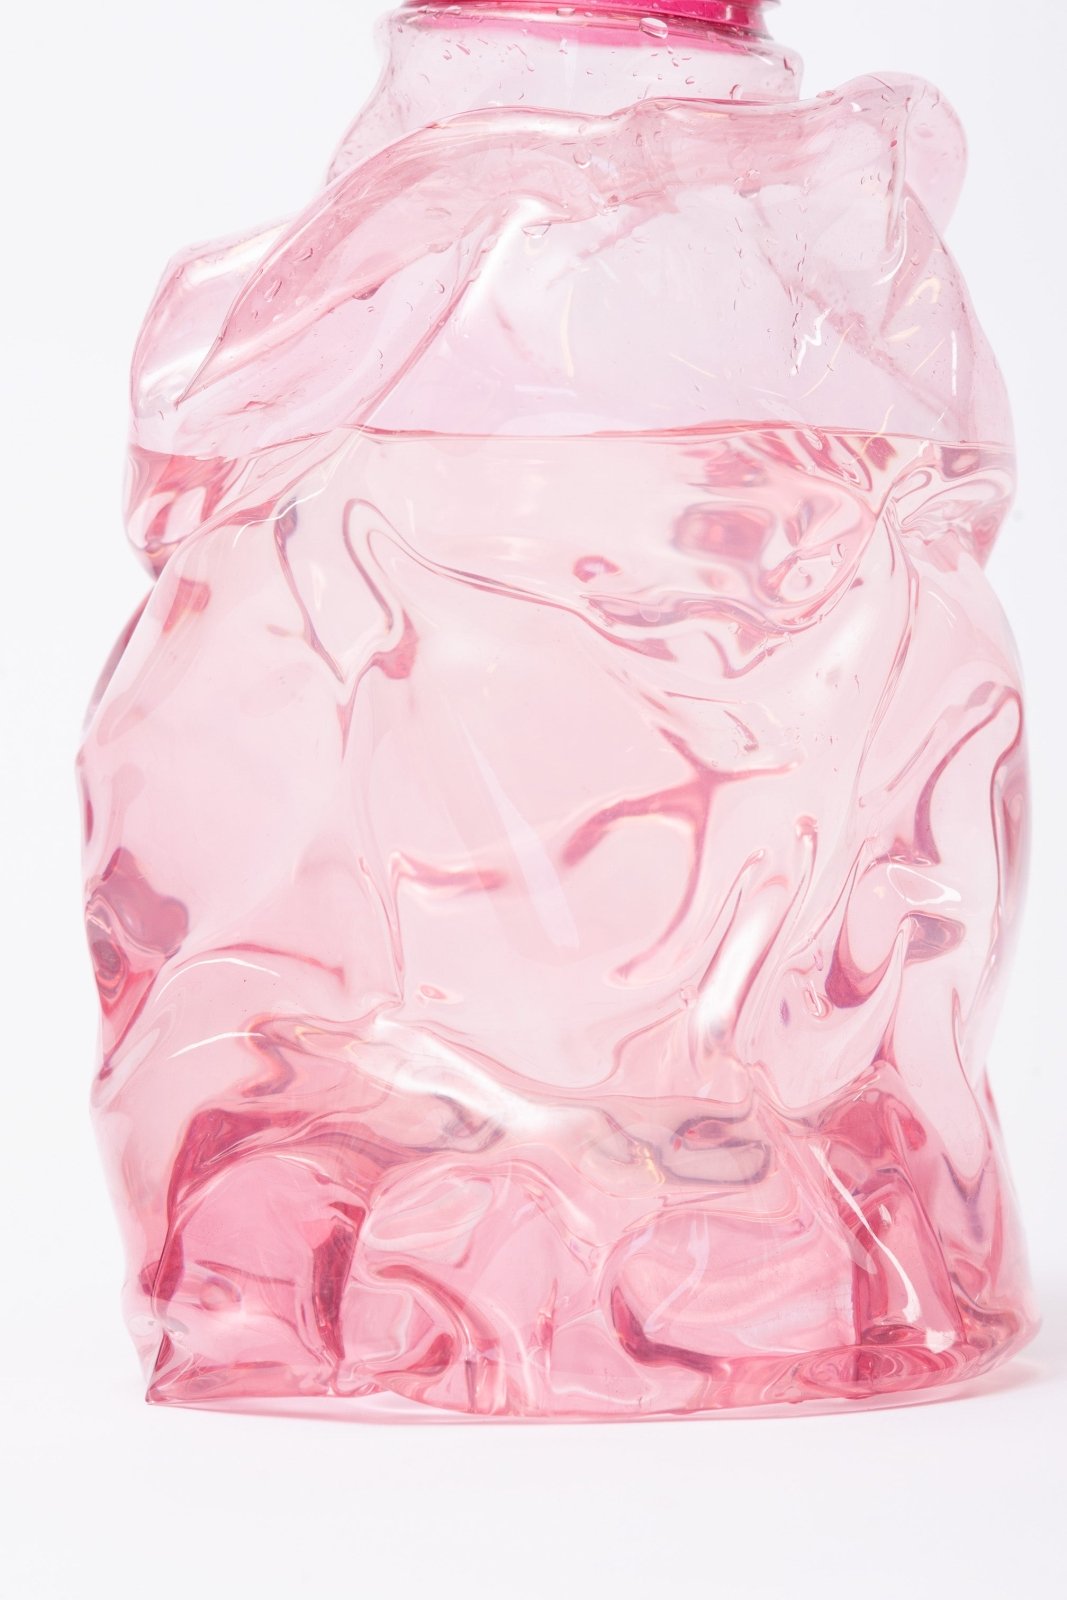 Eros Torso HUE M - Pink - Vase Vase von NIKO JUNE